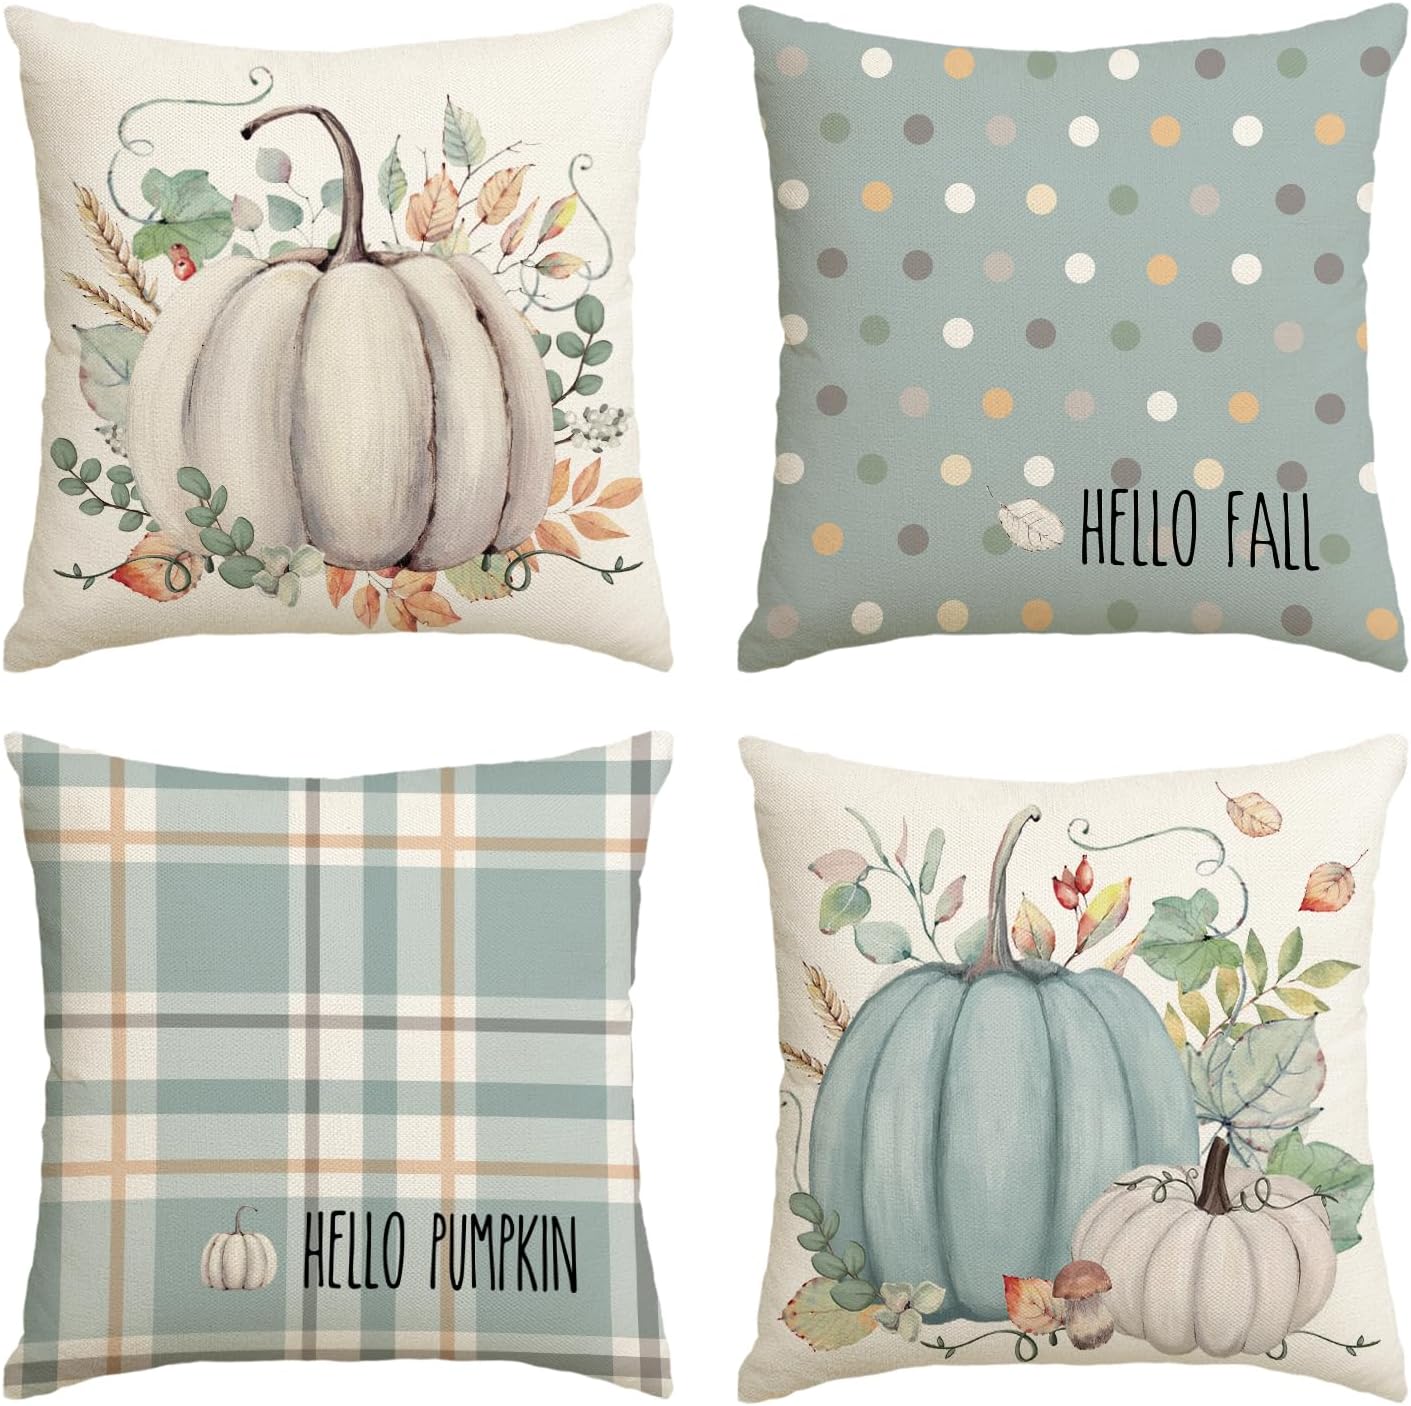 18x18 Hello Fall Hello Pumpkin Throw Pillow Covers